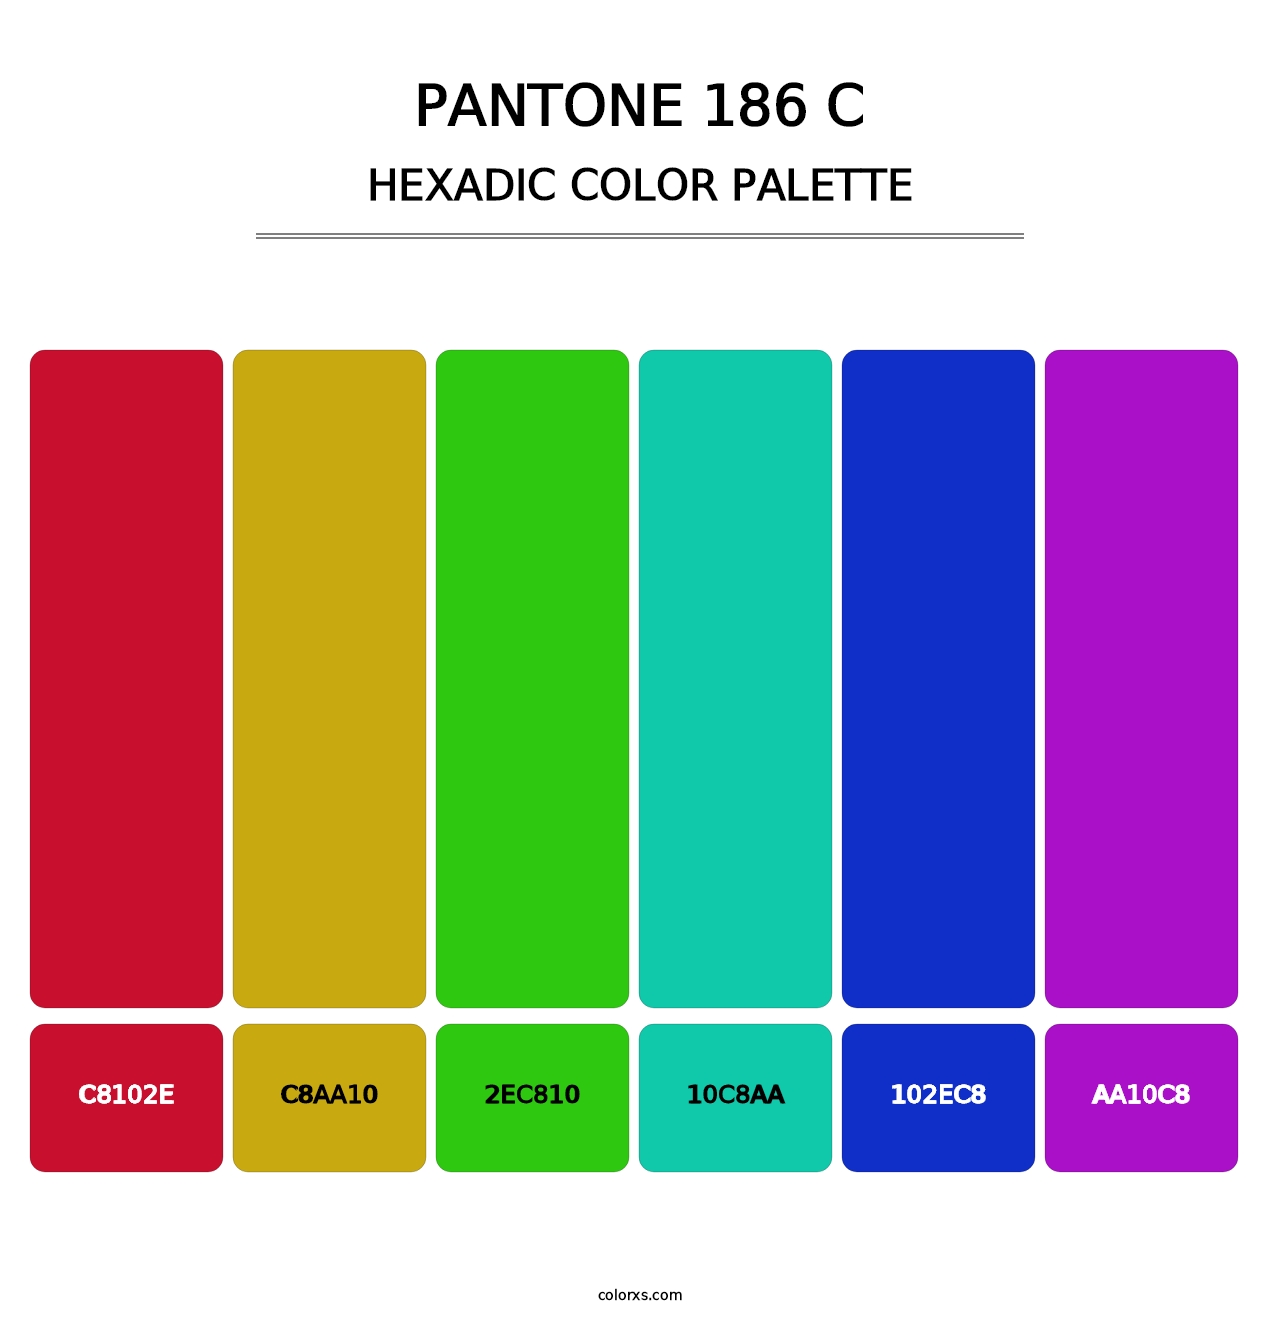 PANTONE 186 C - Hexadic Color Palette